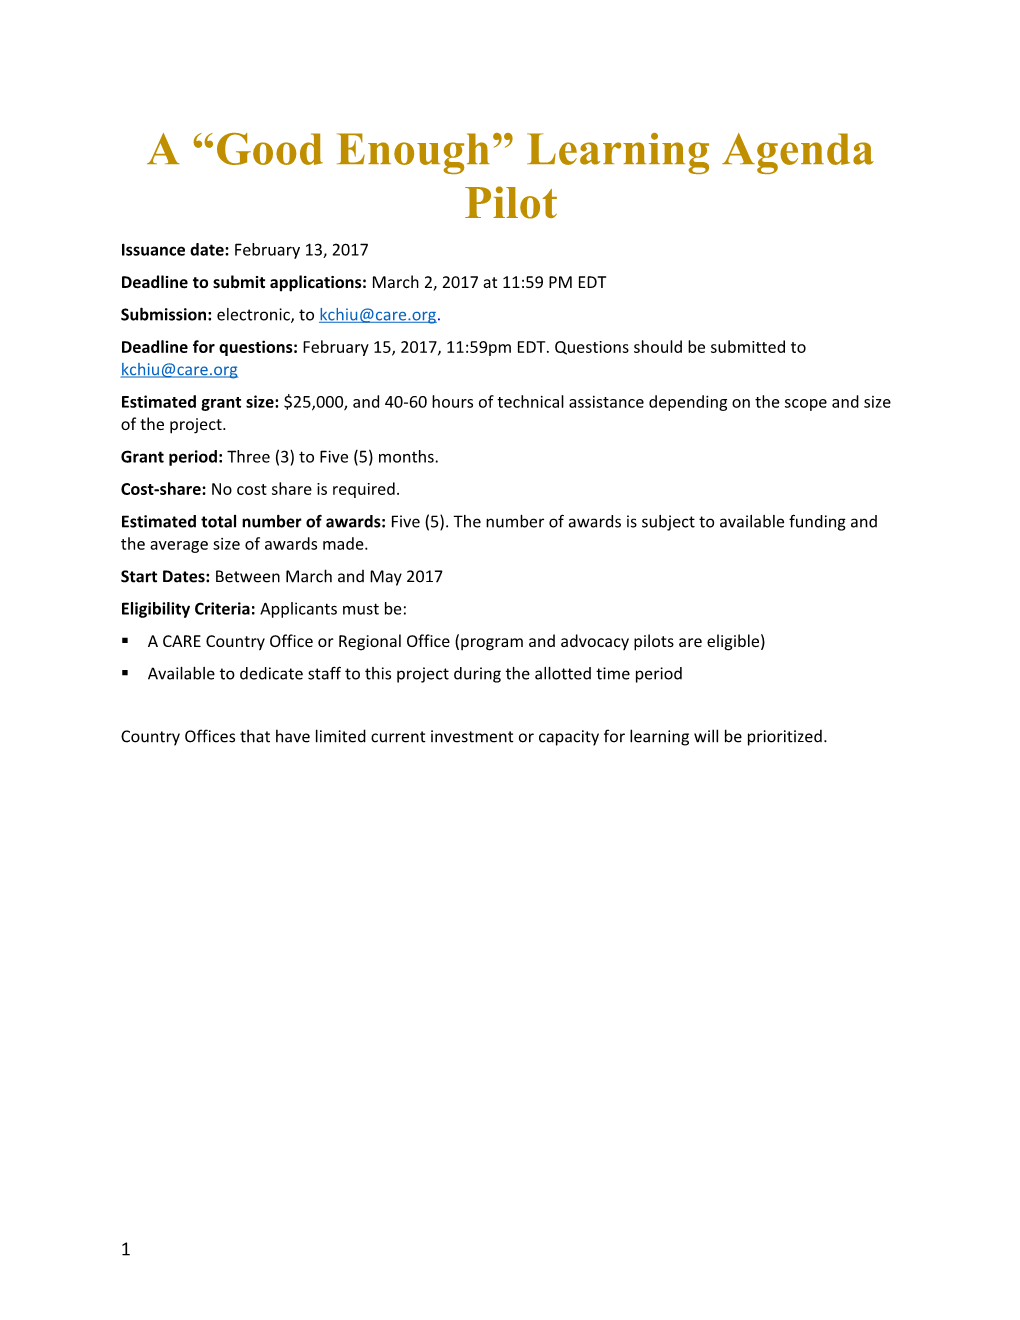 A Good Enough Learning Agenda Pilot